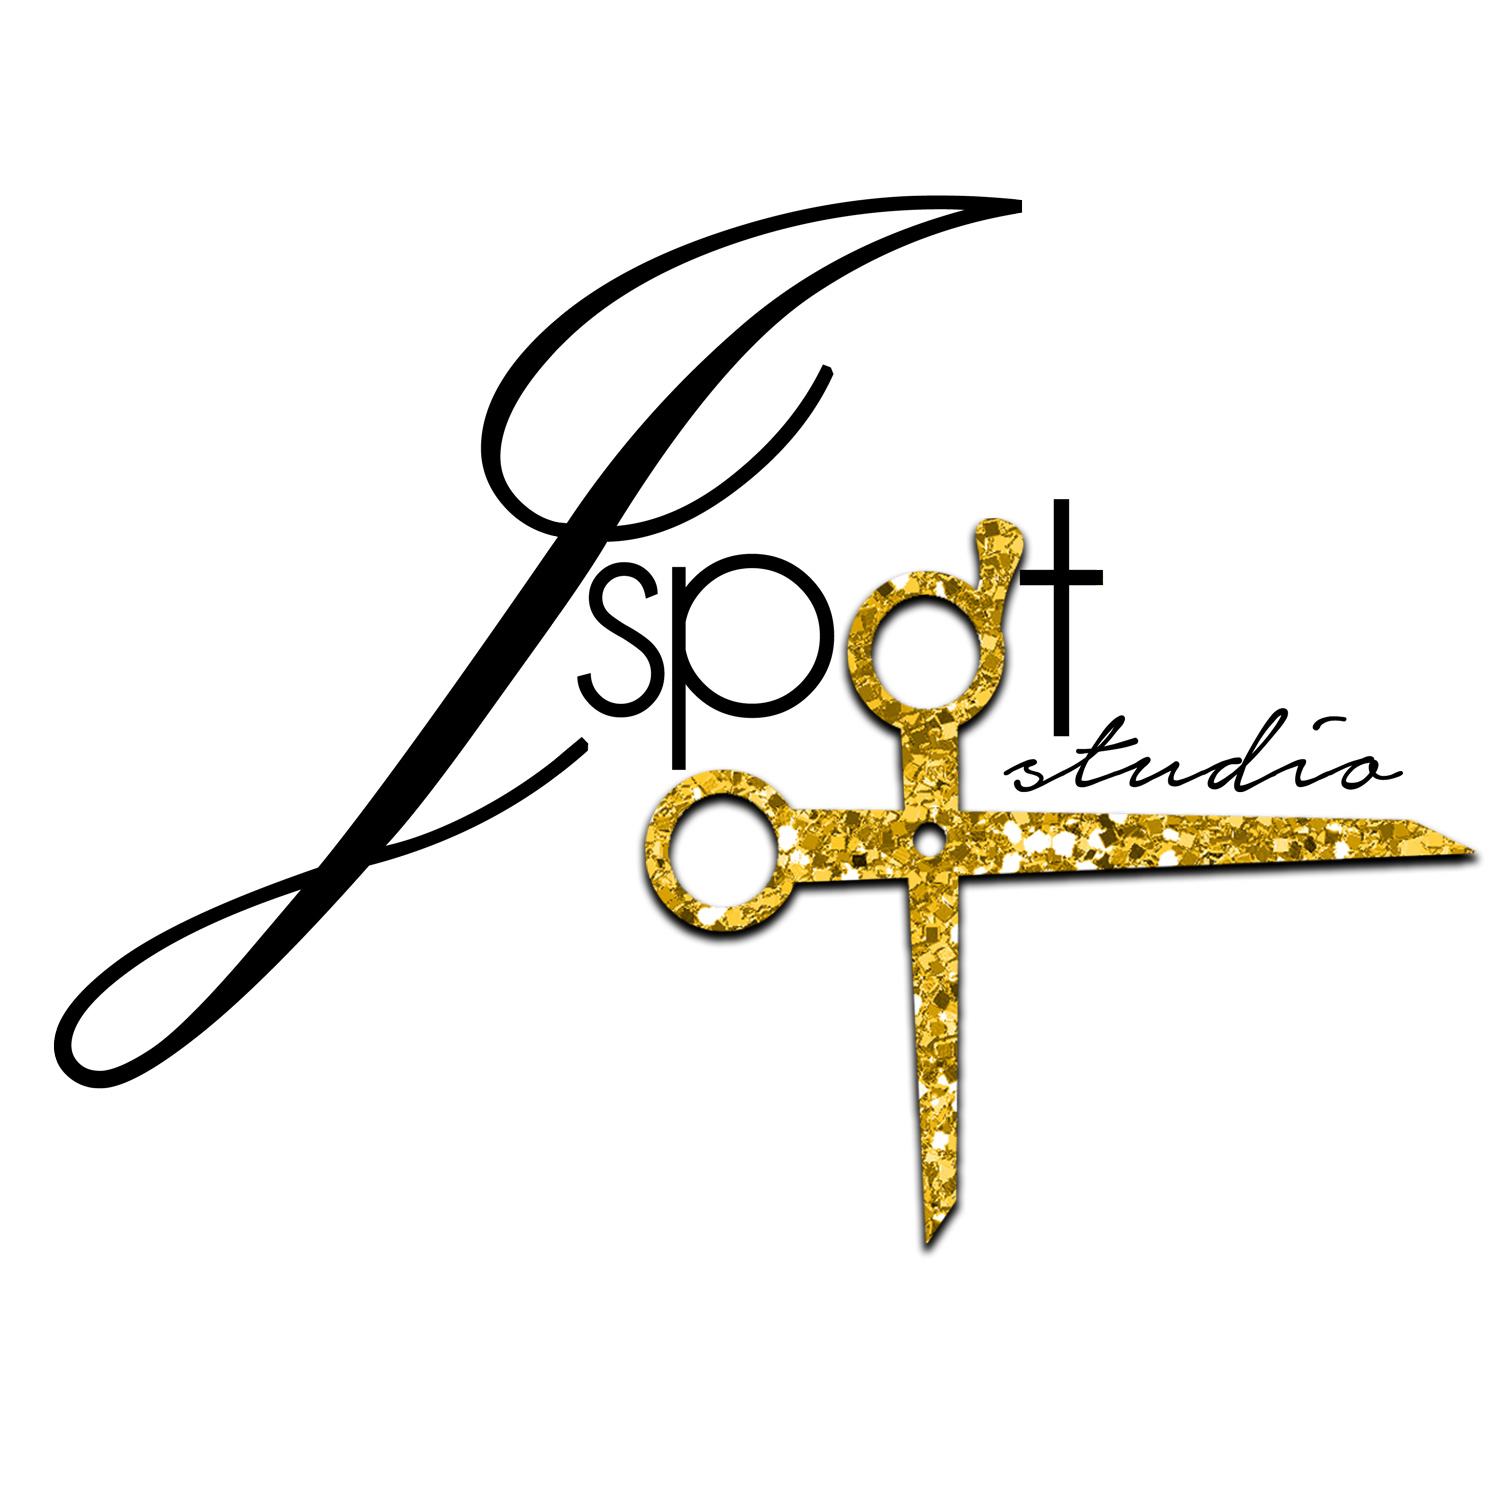 The J Spot Studio